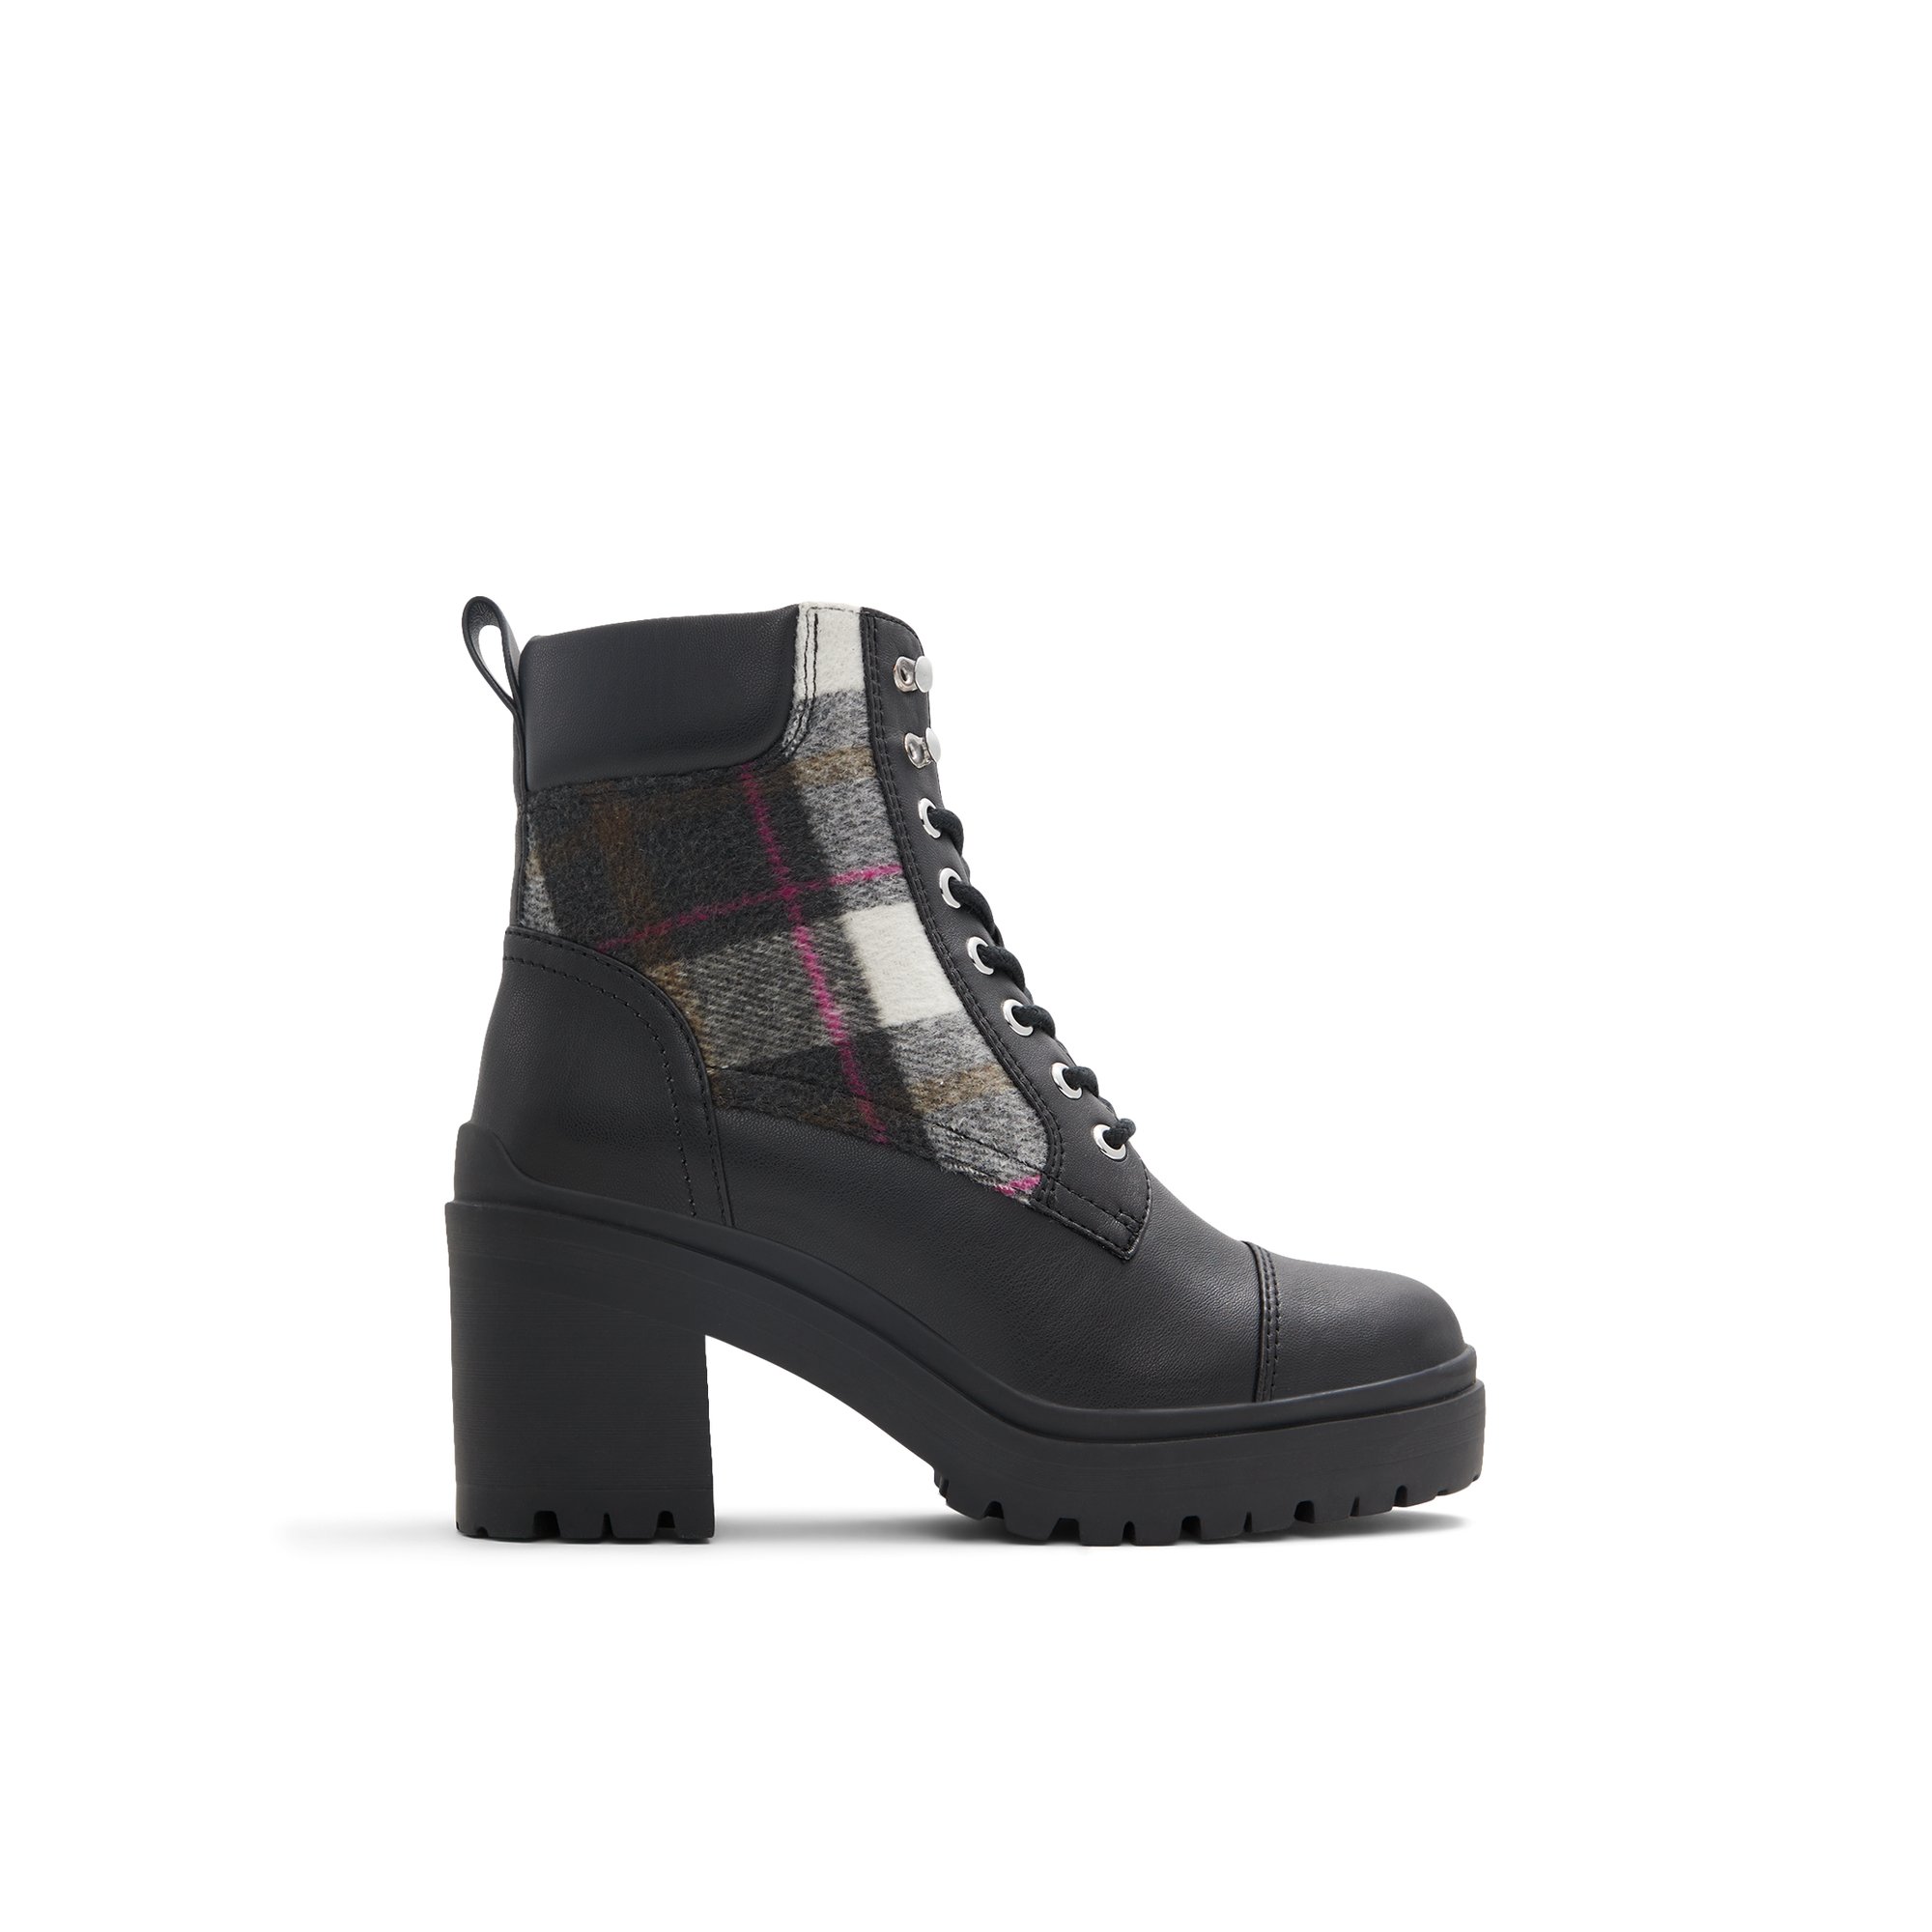 ALDO Alique - Women's Boots Winter - Black